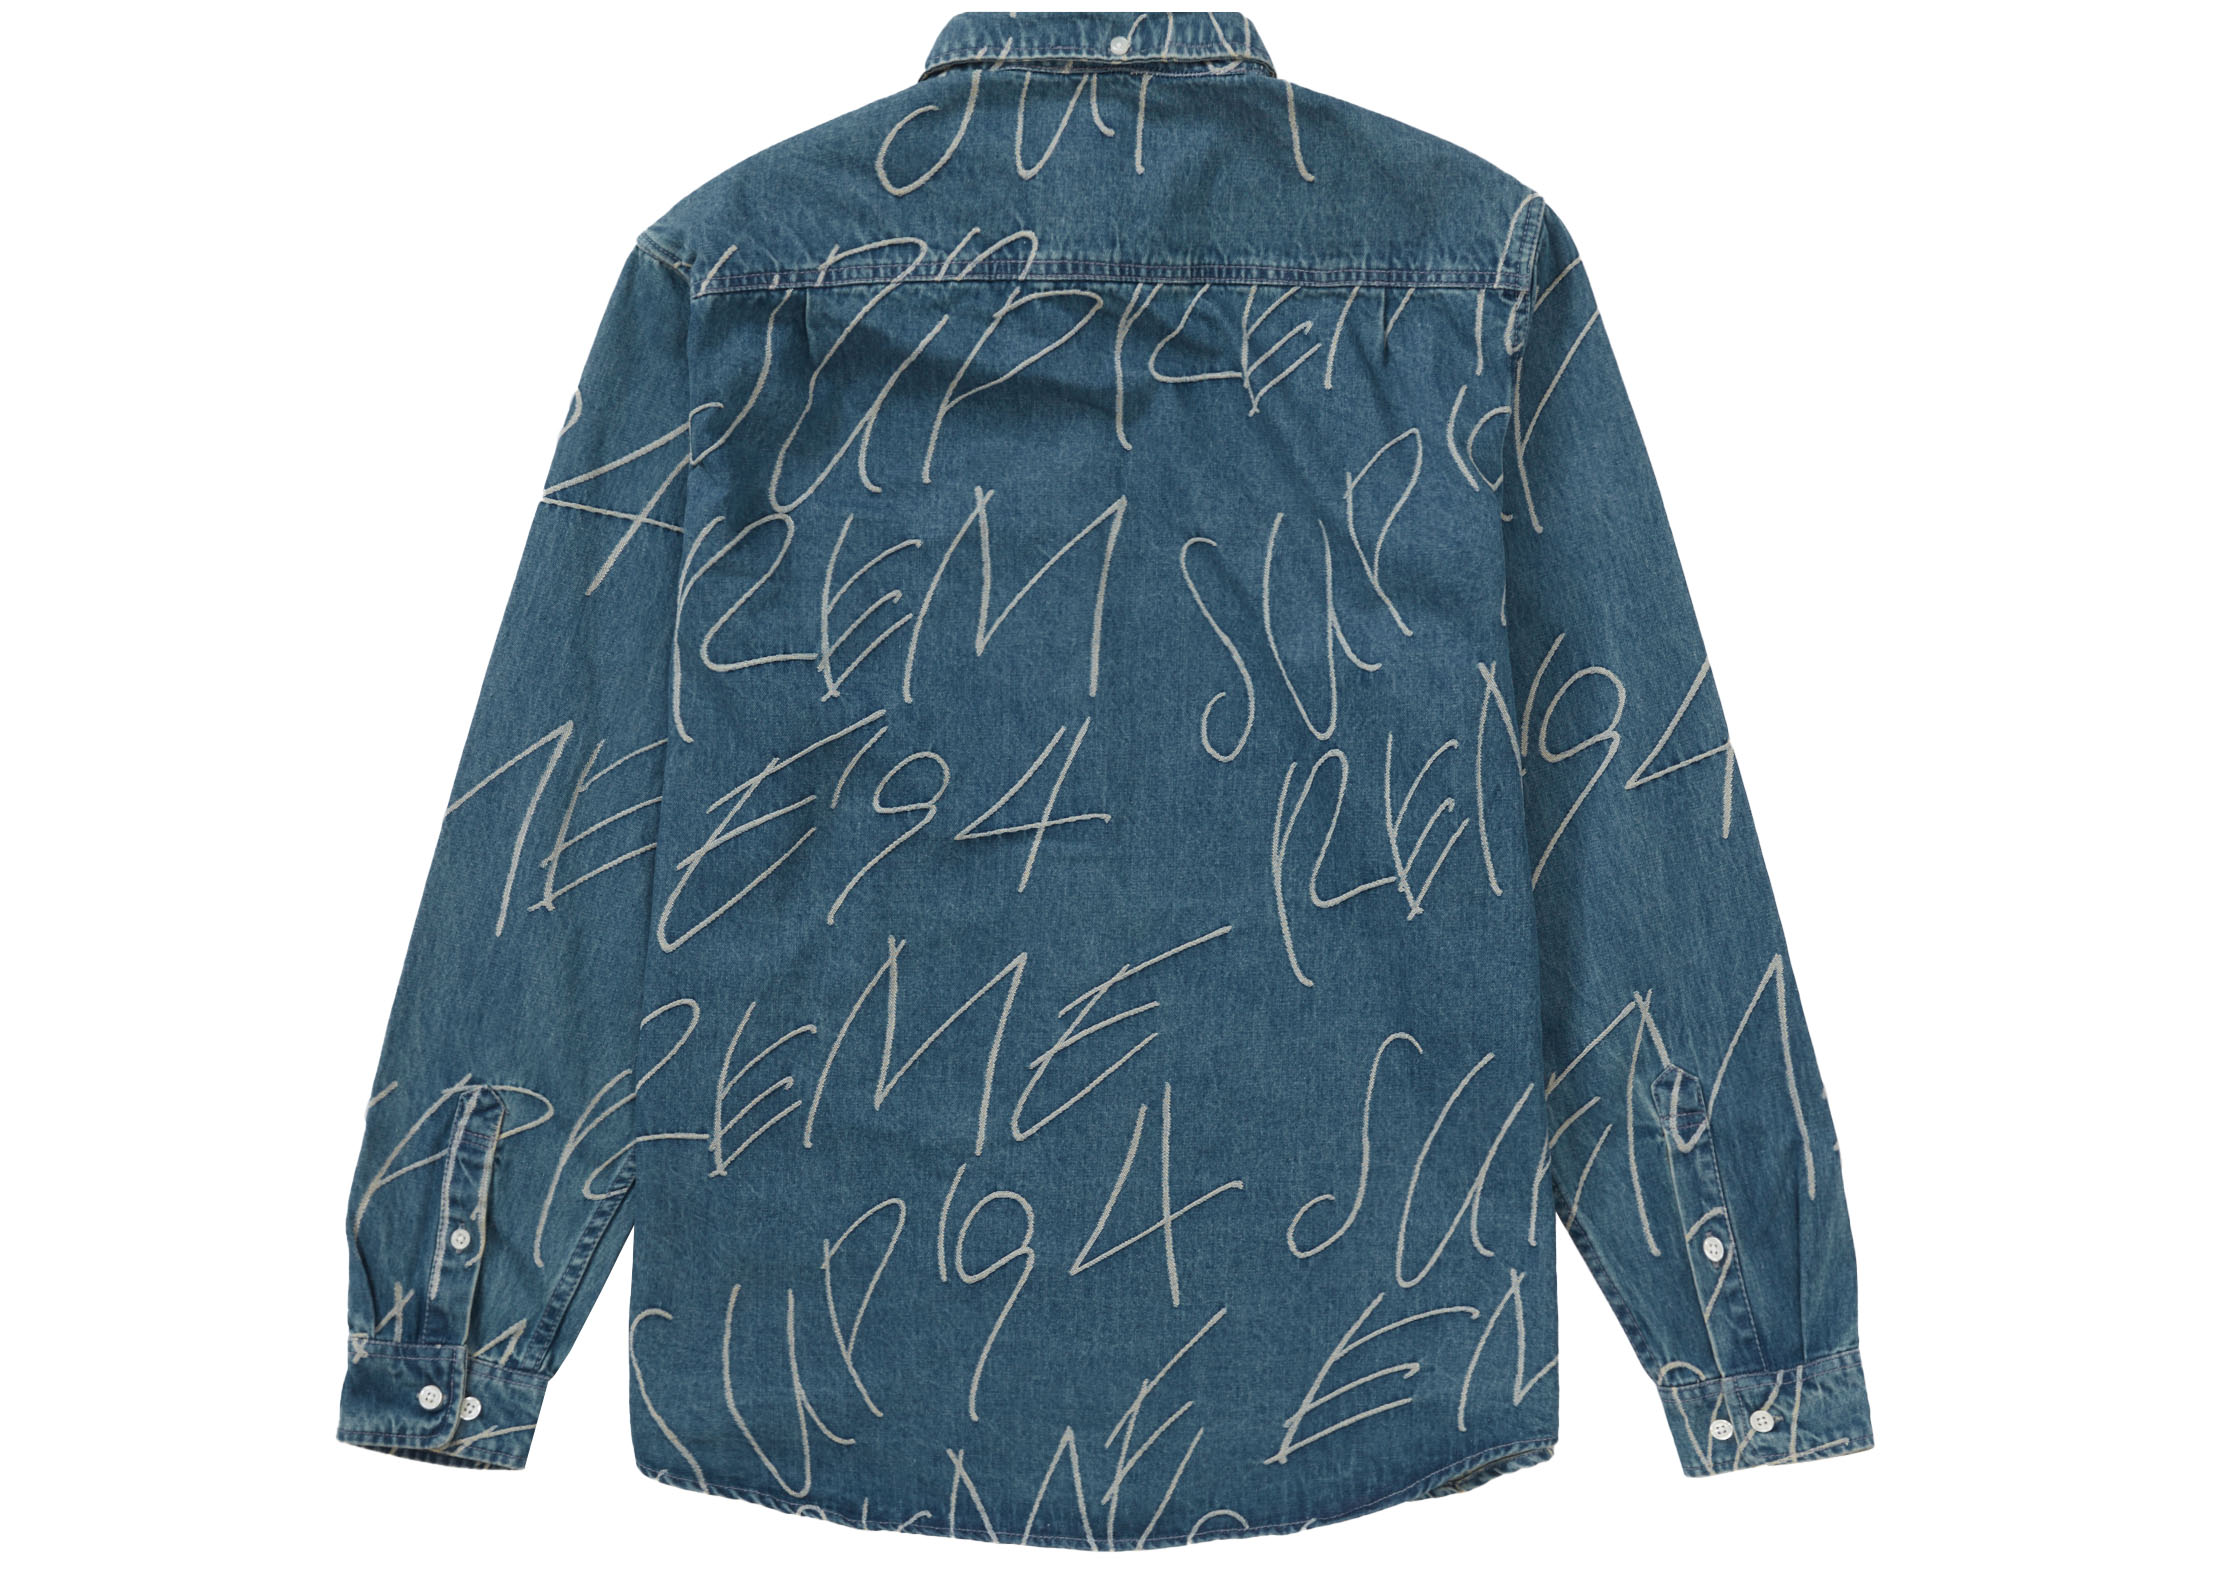 supSupreme Handwriting Jacquard Denim Shirt